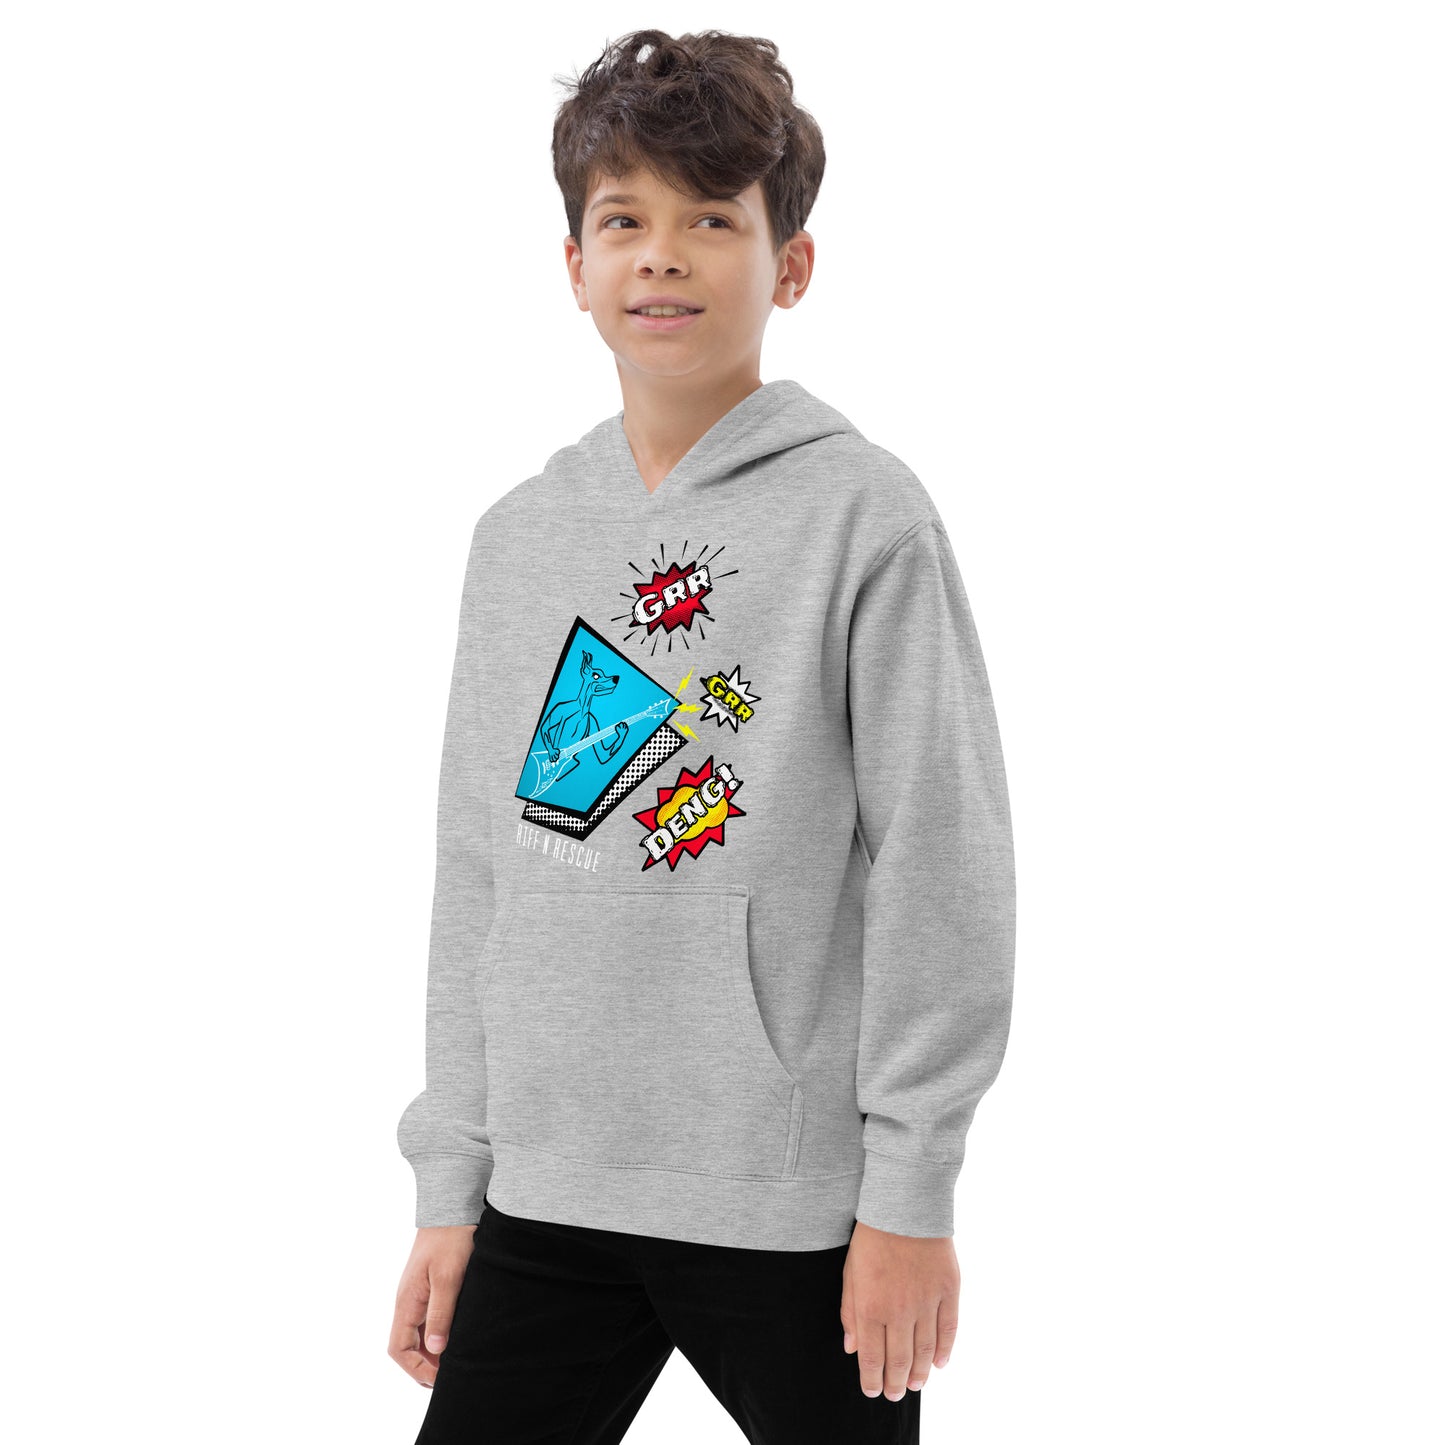 Grr Grr Deng  Kids fleece hoodie